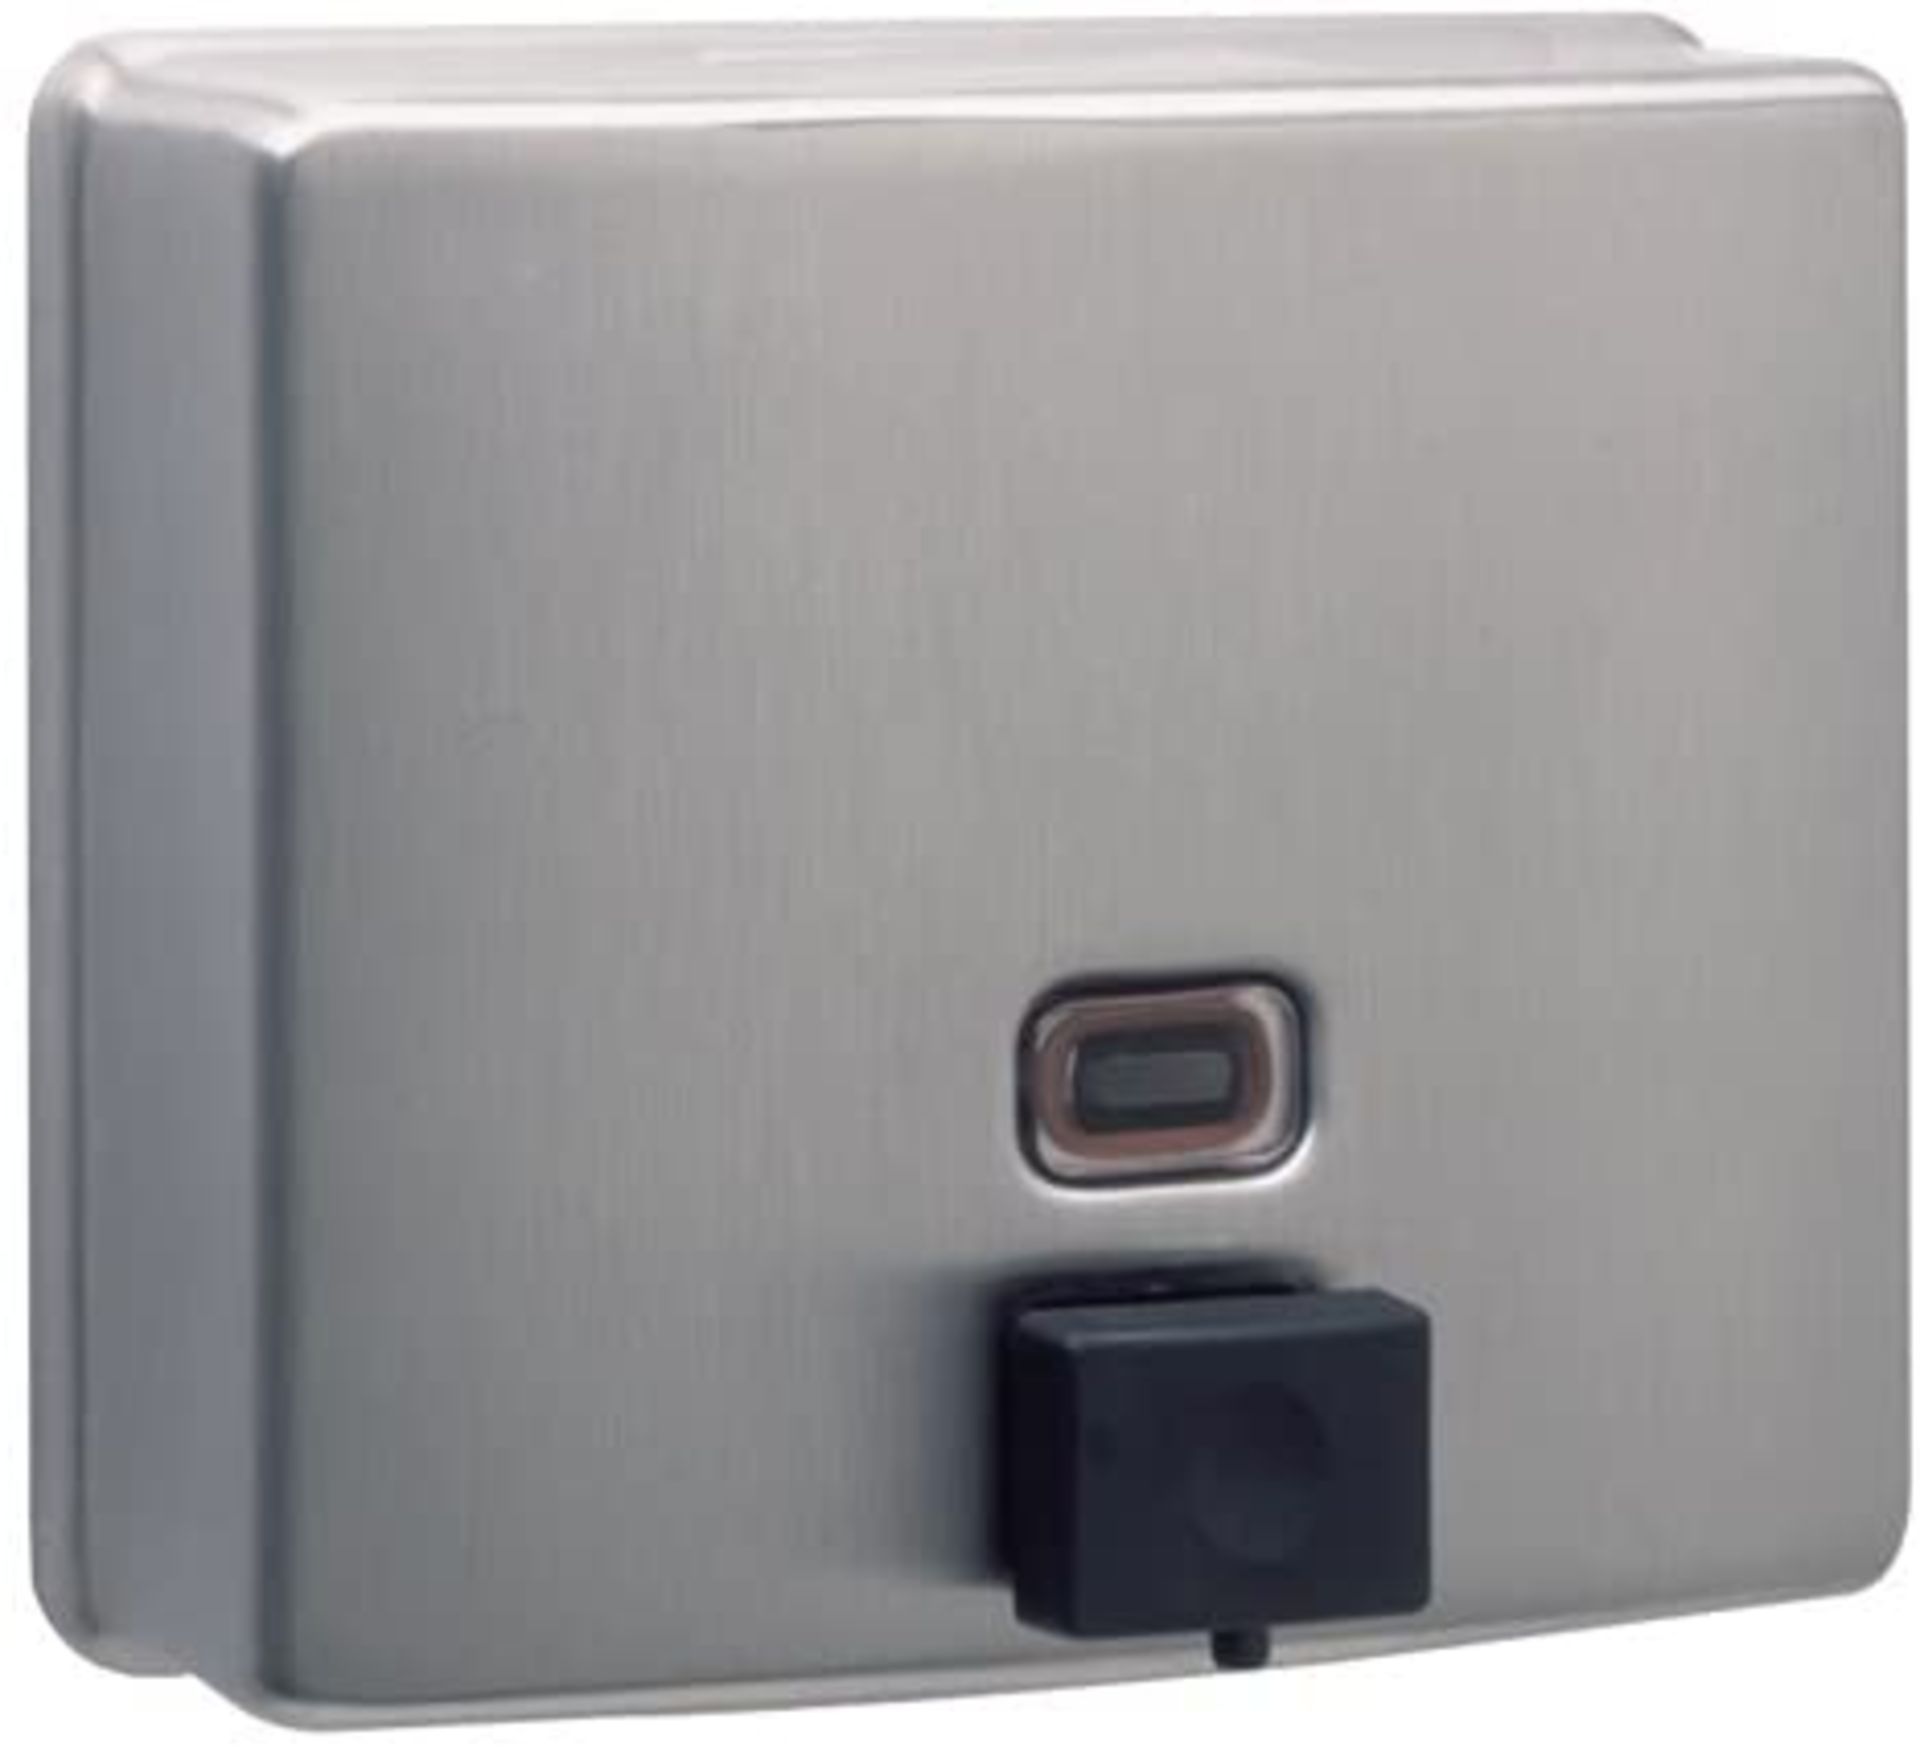 Bobrick Contura Series Soap Dispenser